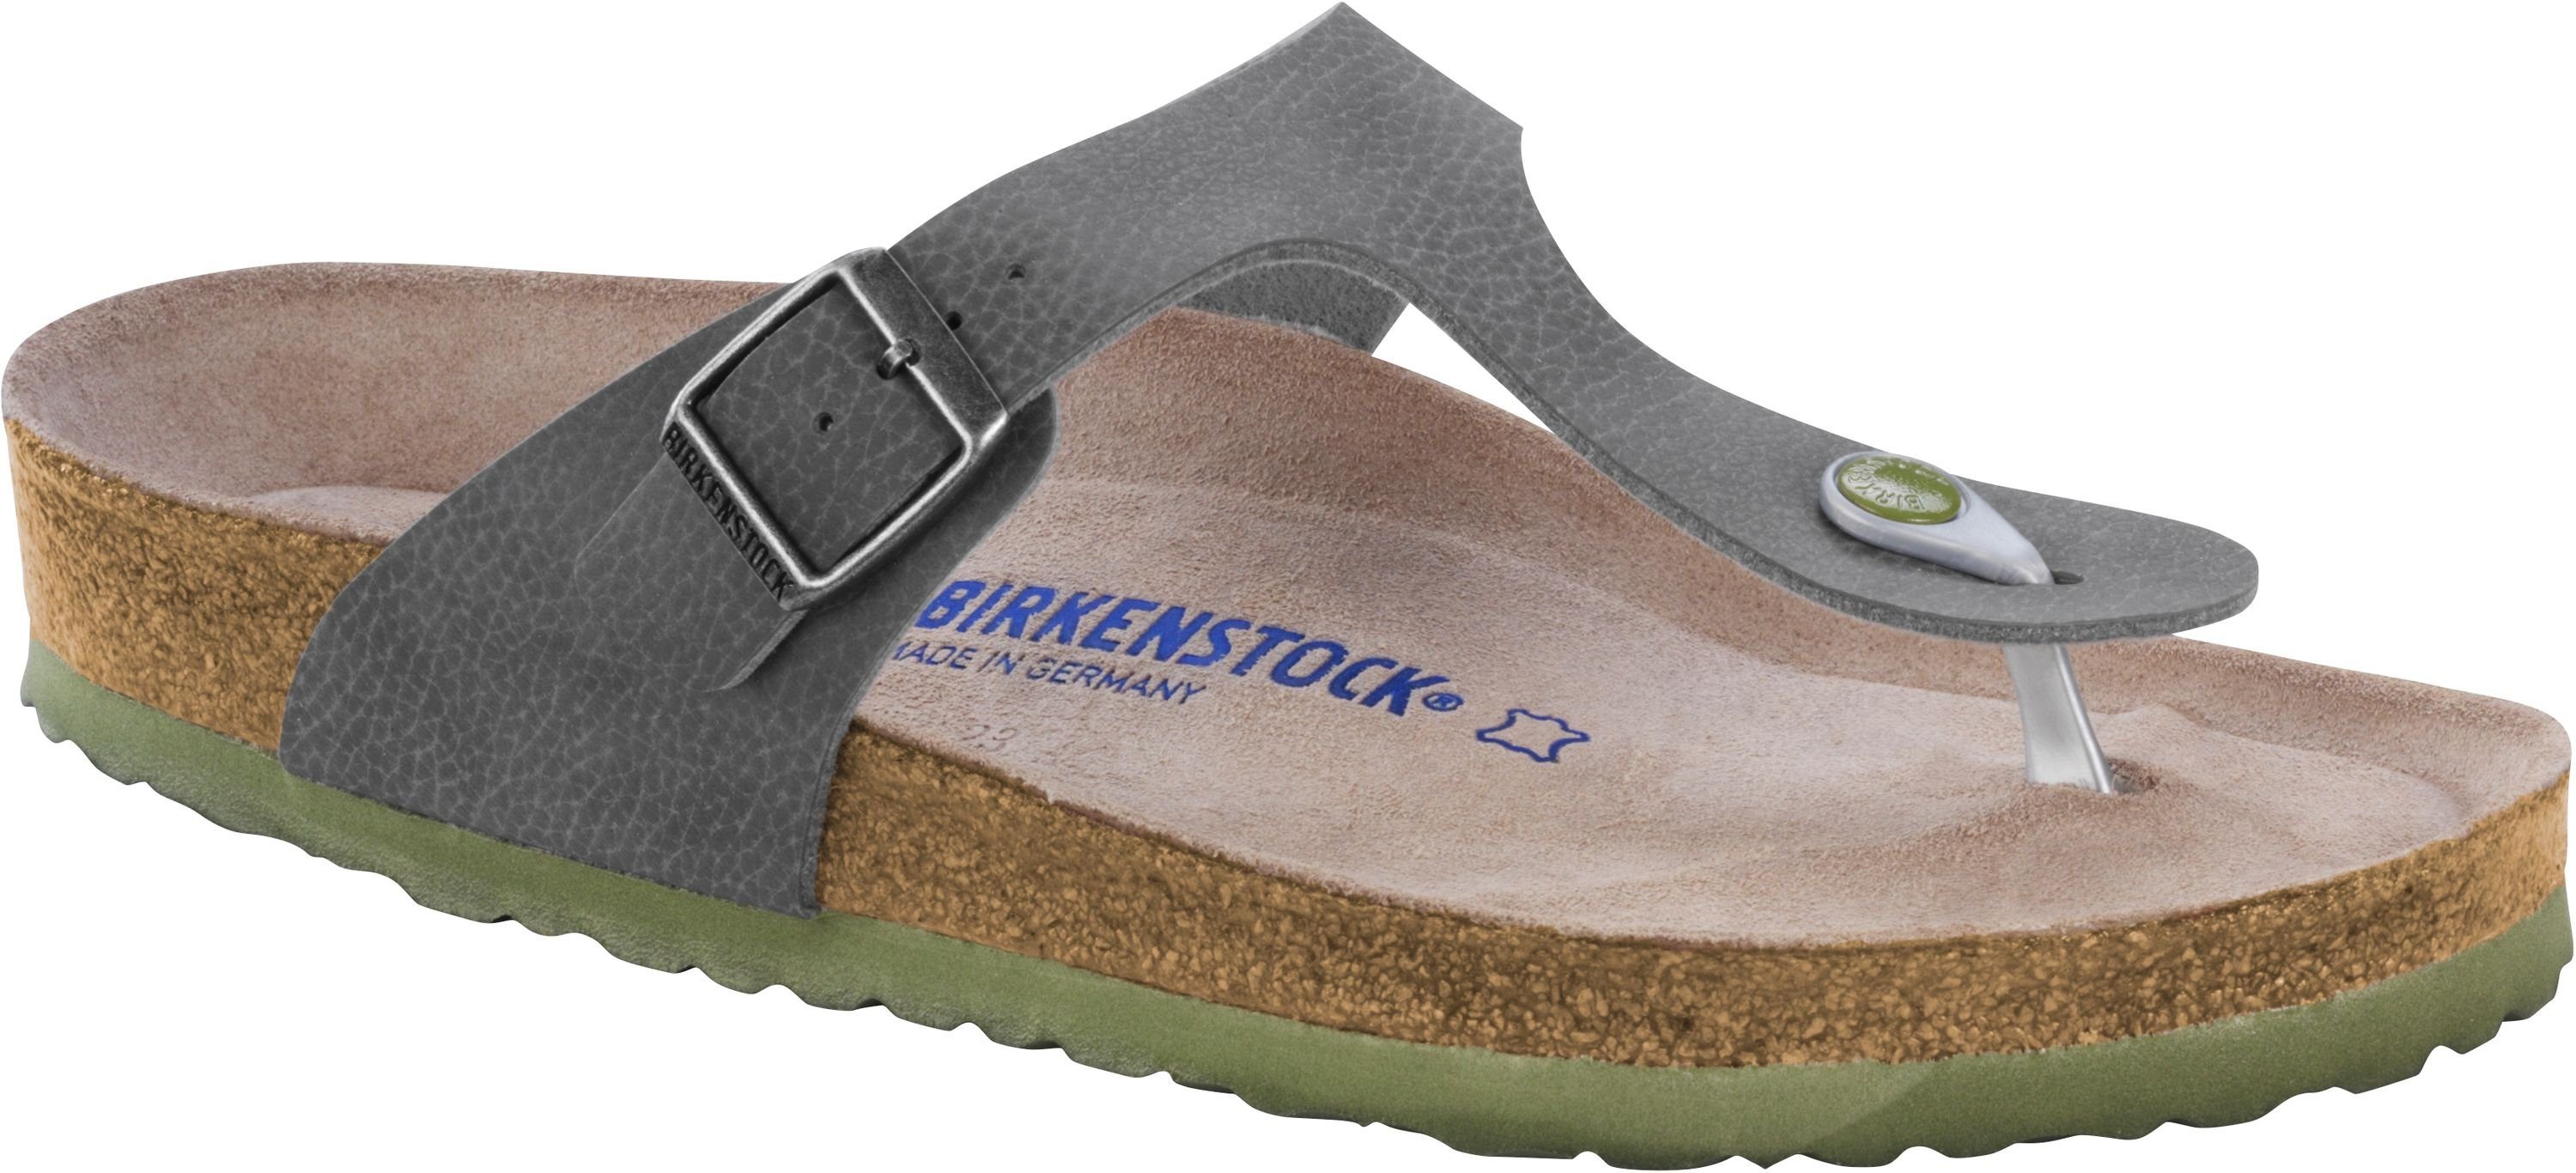 Birkenstock Birkenstock Zehensteg Gizeh BS desert soil grey - 1005134  Pantolette